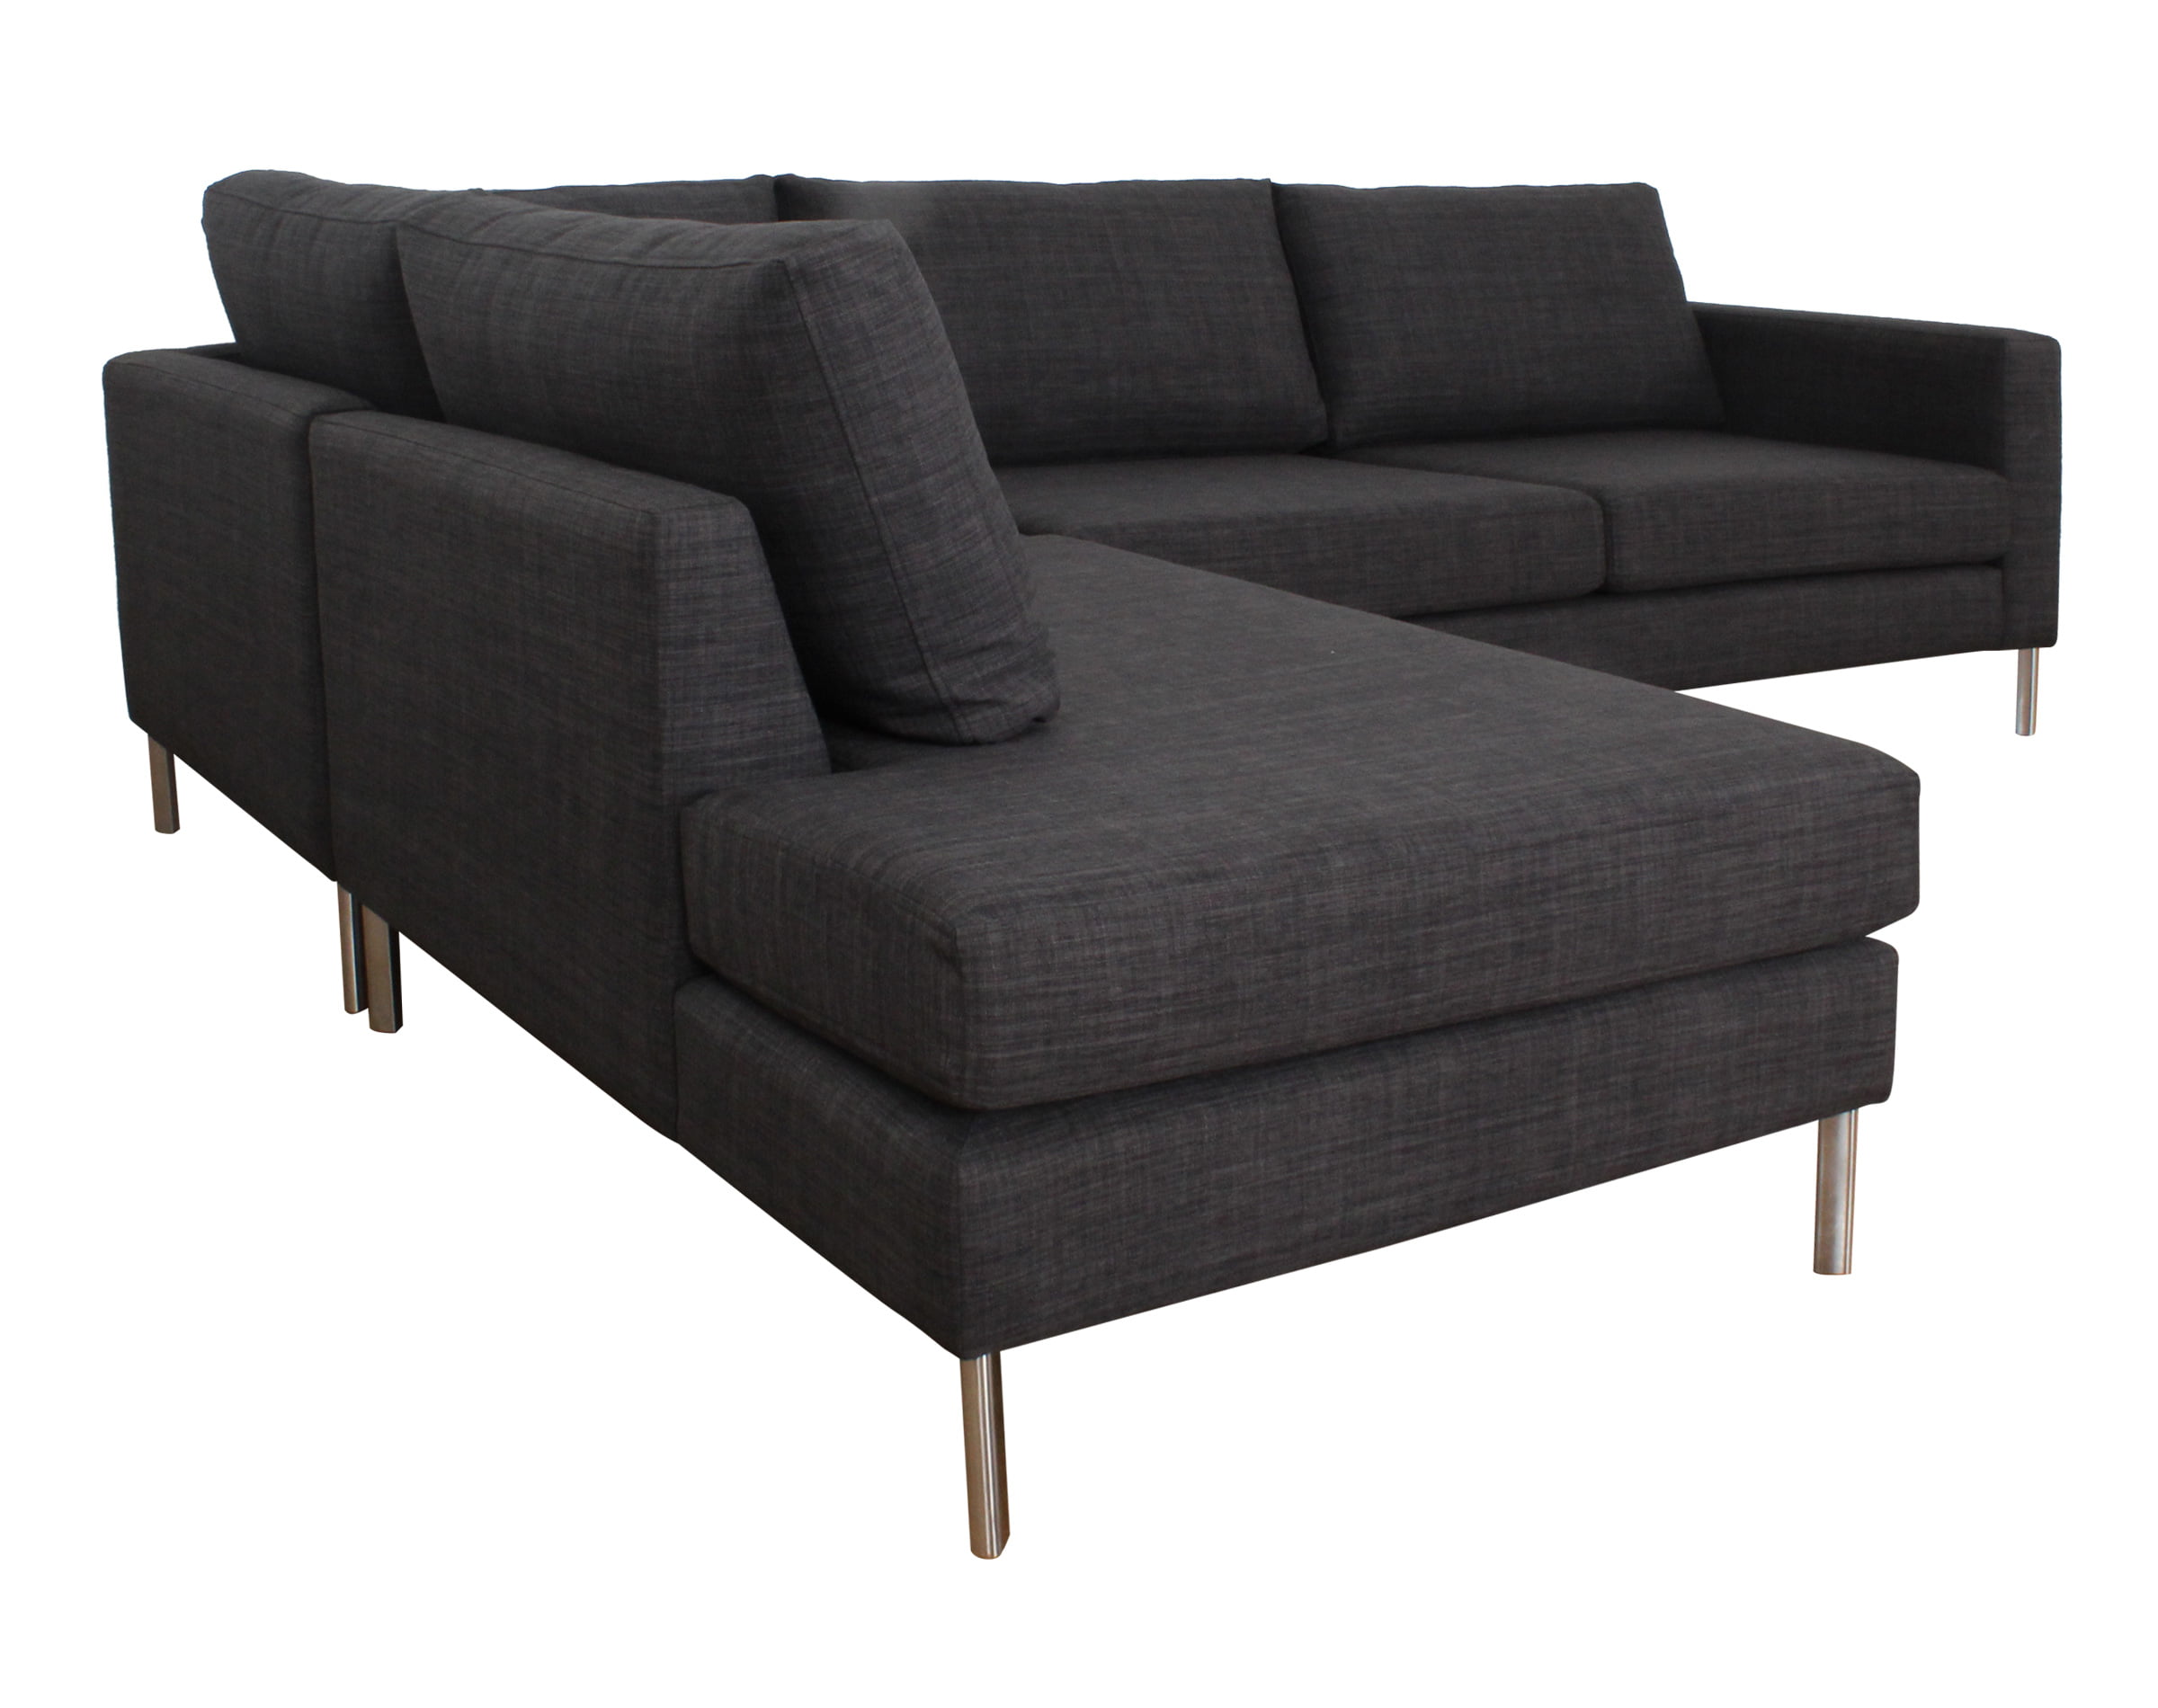 sofa modular izquierdo espacio libre bariloche marengo pata biselada plata 3